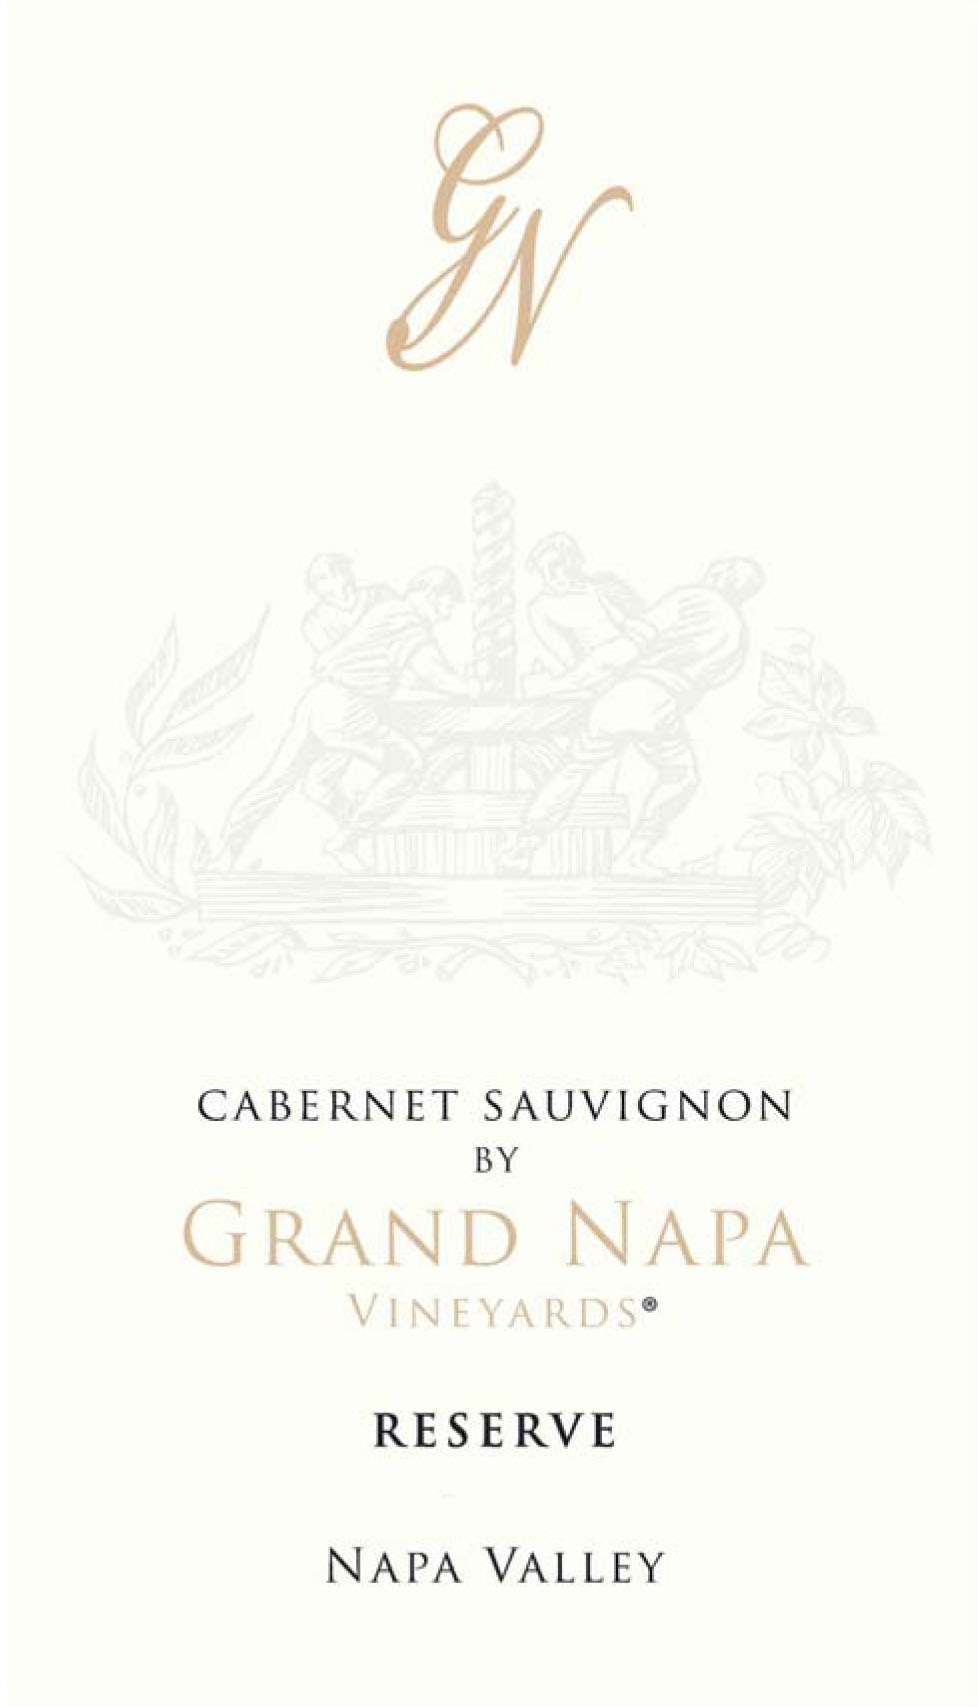 Grand Napa Vineyards - Cabernet Sauvignon Reserve  label